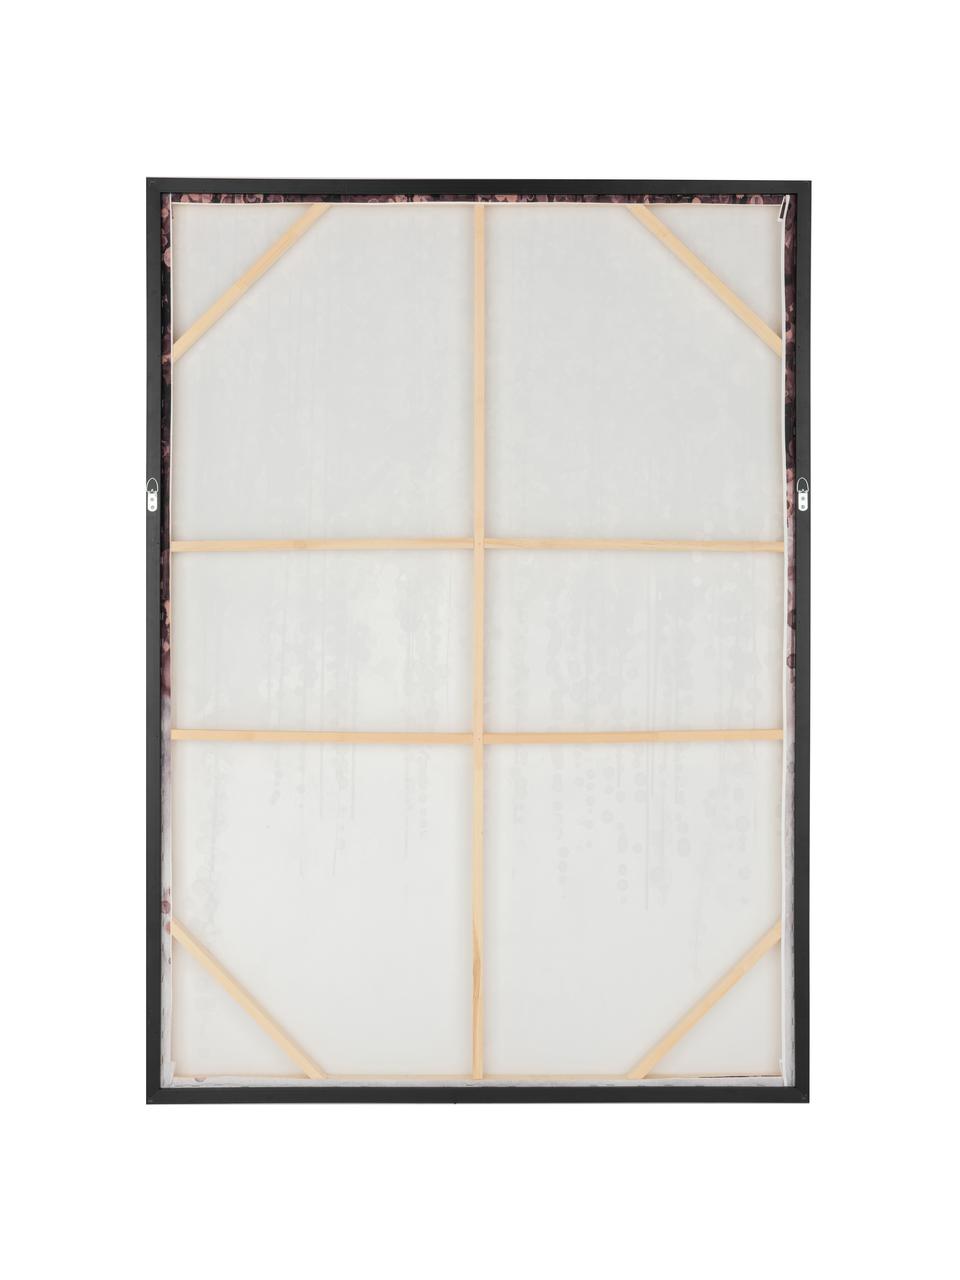 Leinwanddruck Willow, Rahmen: Kiefernholz, Kunststoff, , Bild: Leinwand, Lila,Braun,Grau, B 103 x H 143 cm